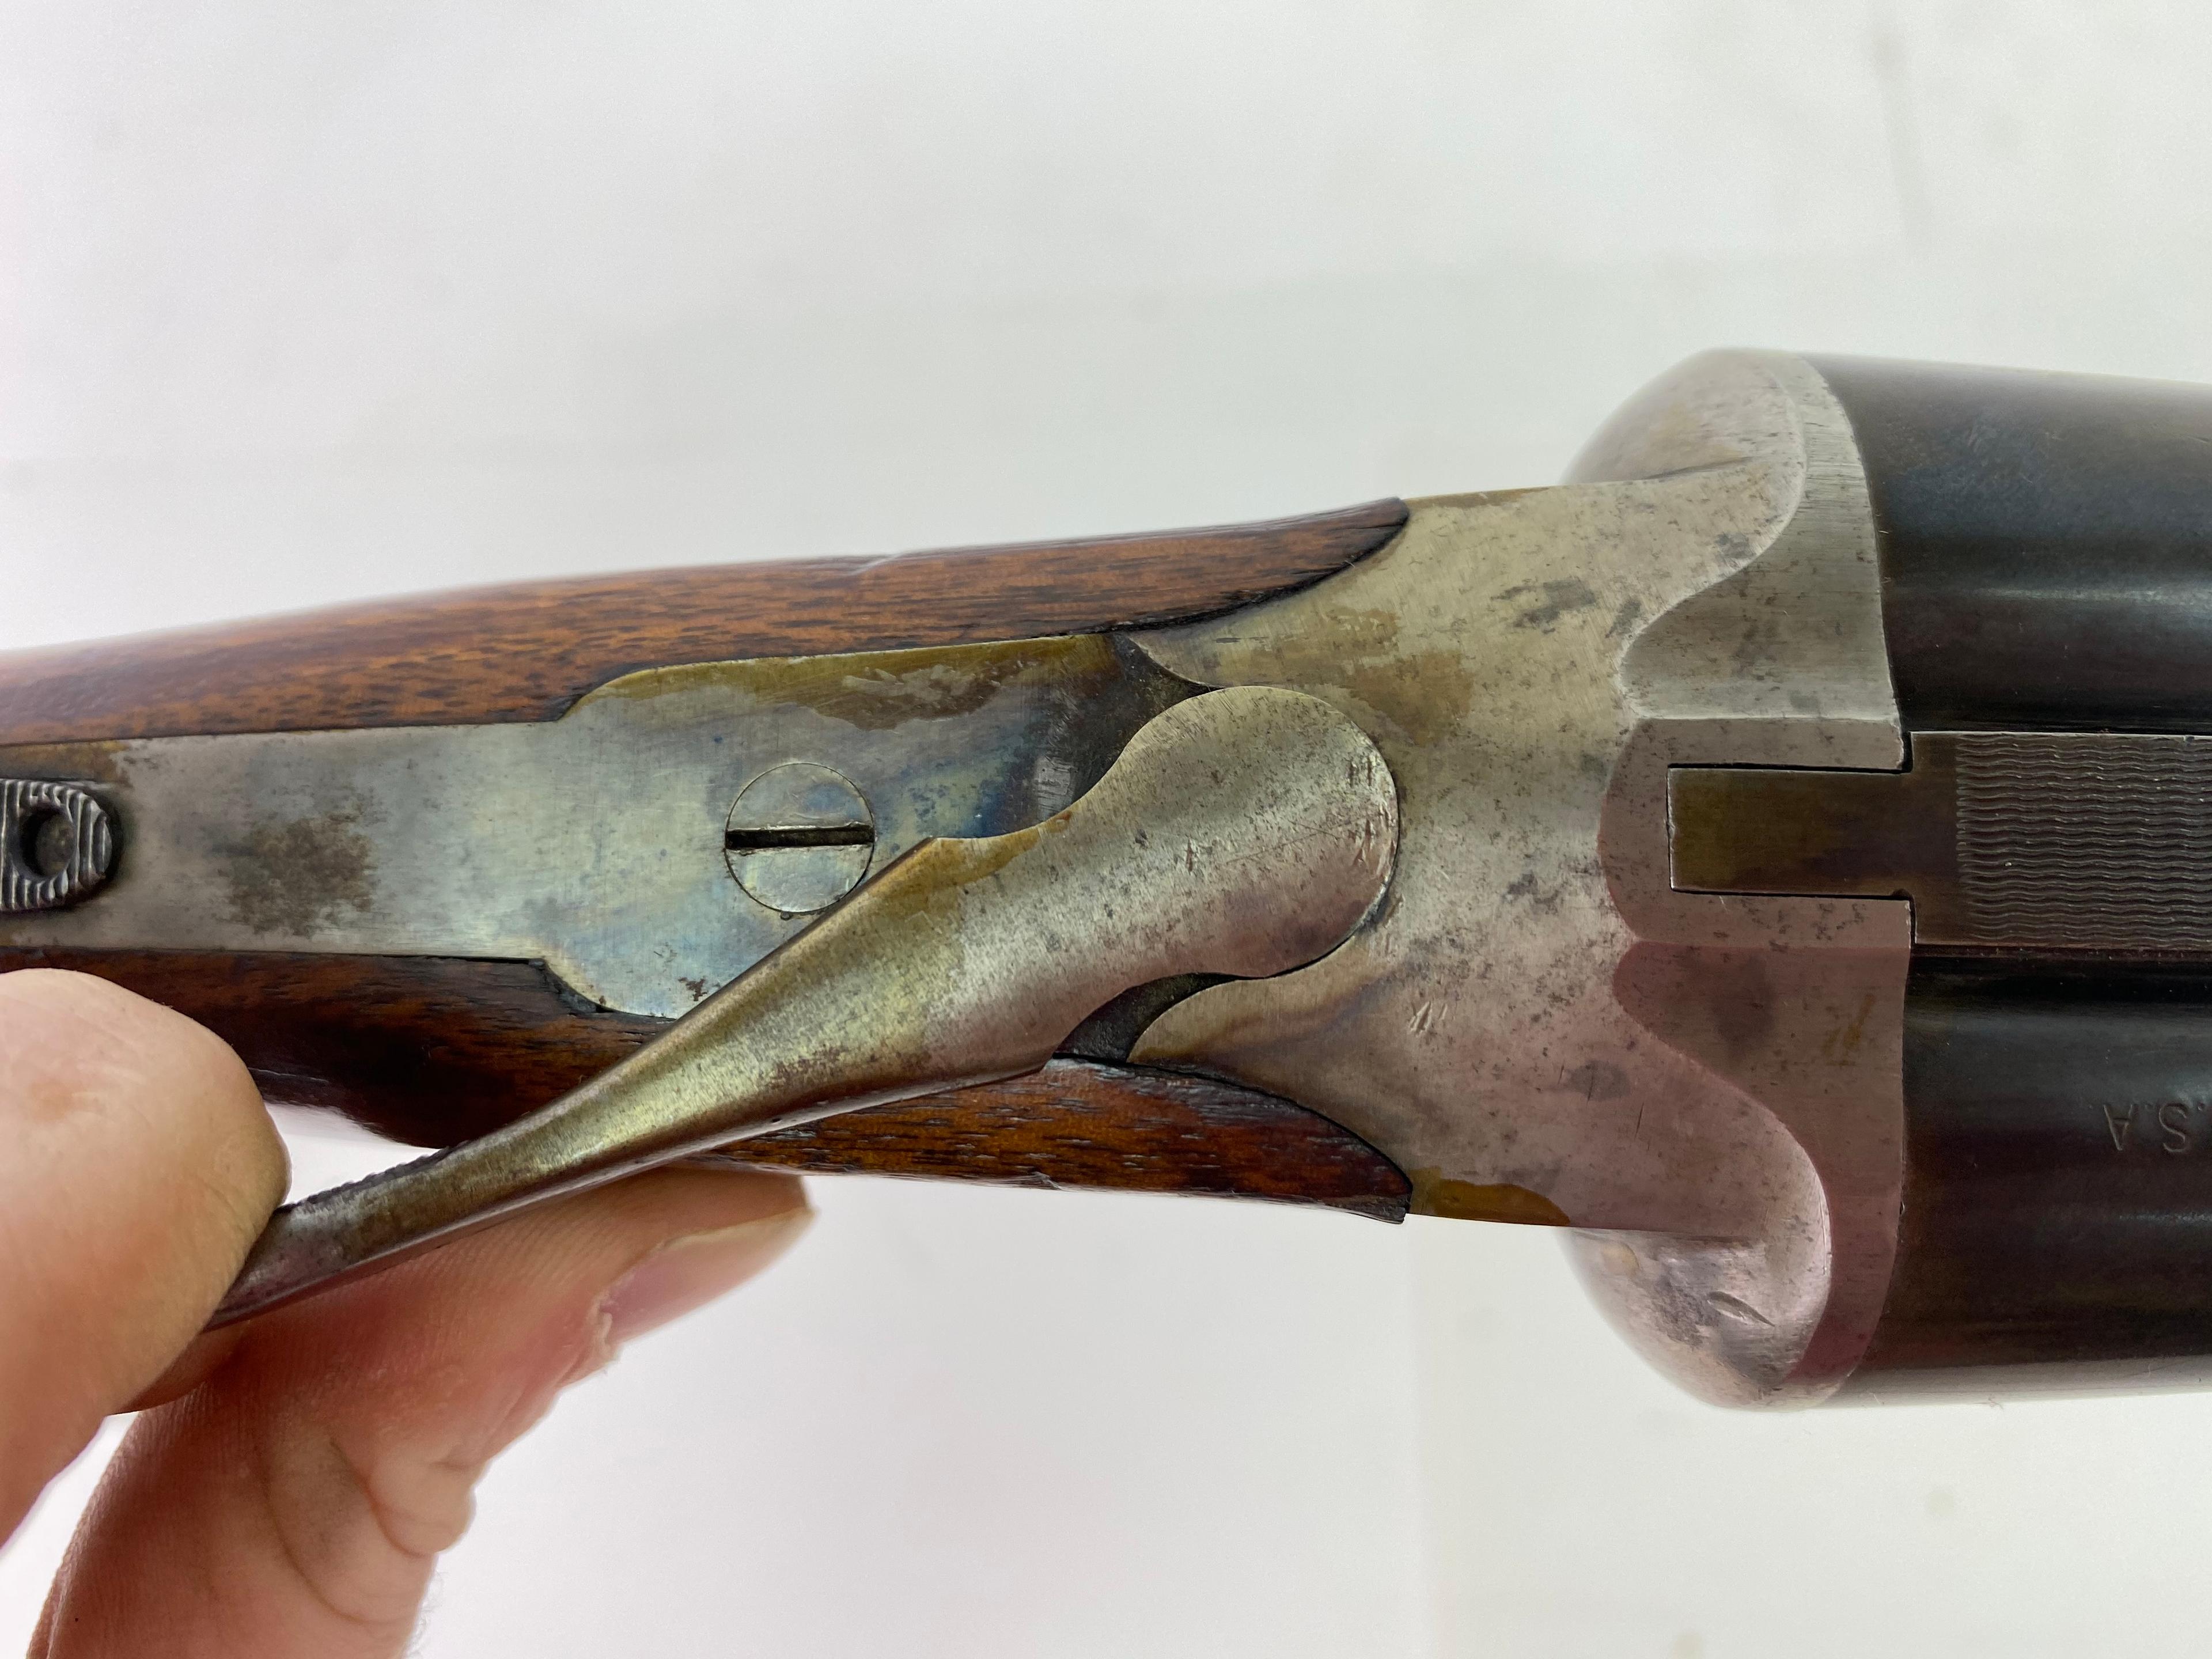 1949 L.C. Smith Field Grade 12 GA. SXS Double Barrel Hammerless Shotgun